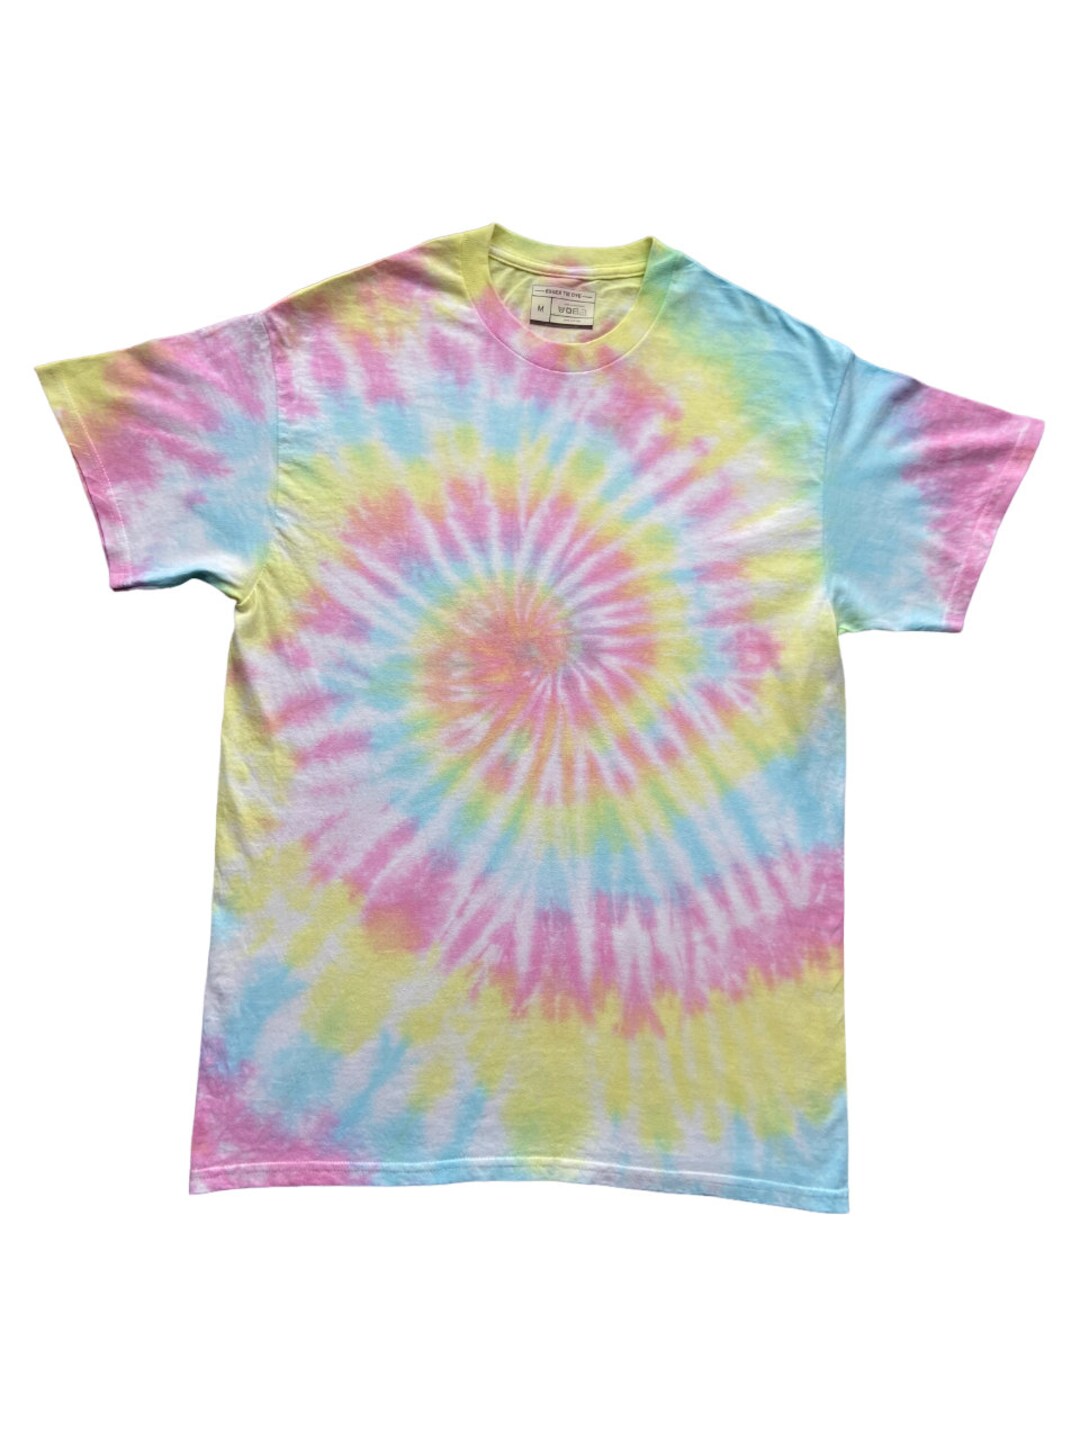 Summer Pastel Tie Dye T-shirt, Adult, Youth, Unisex, XS, S, M, L, XL ...